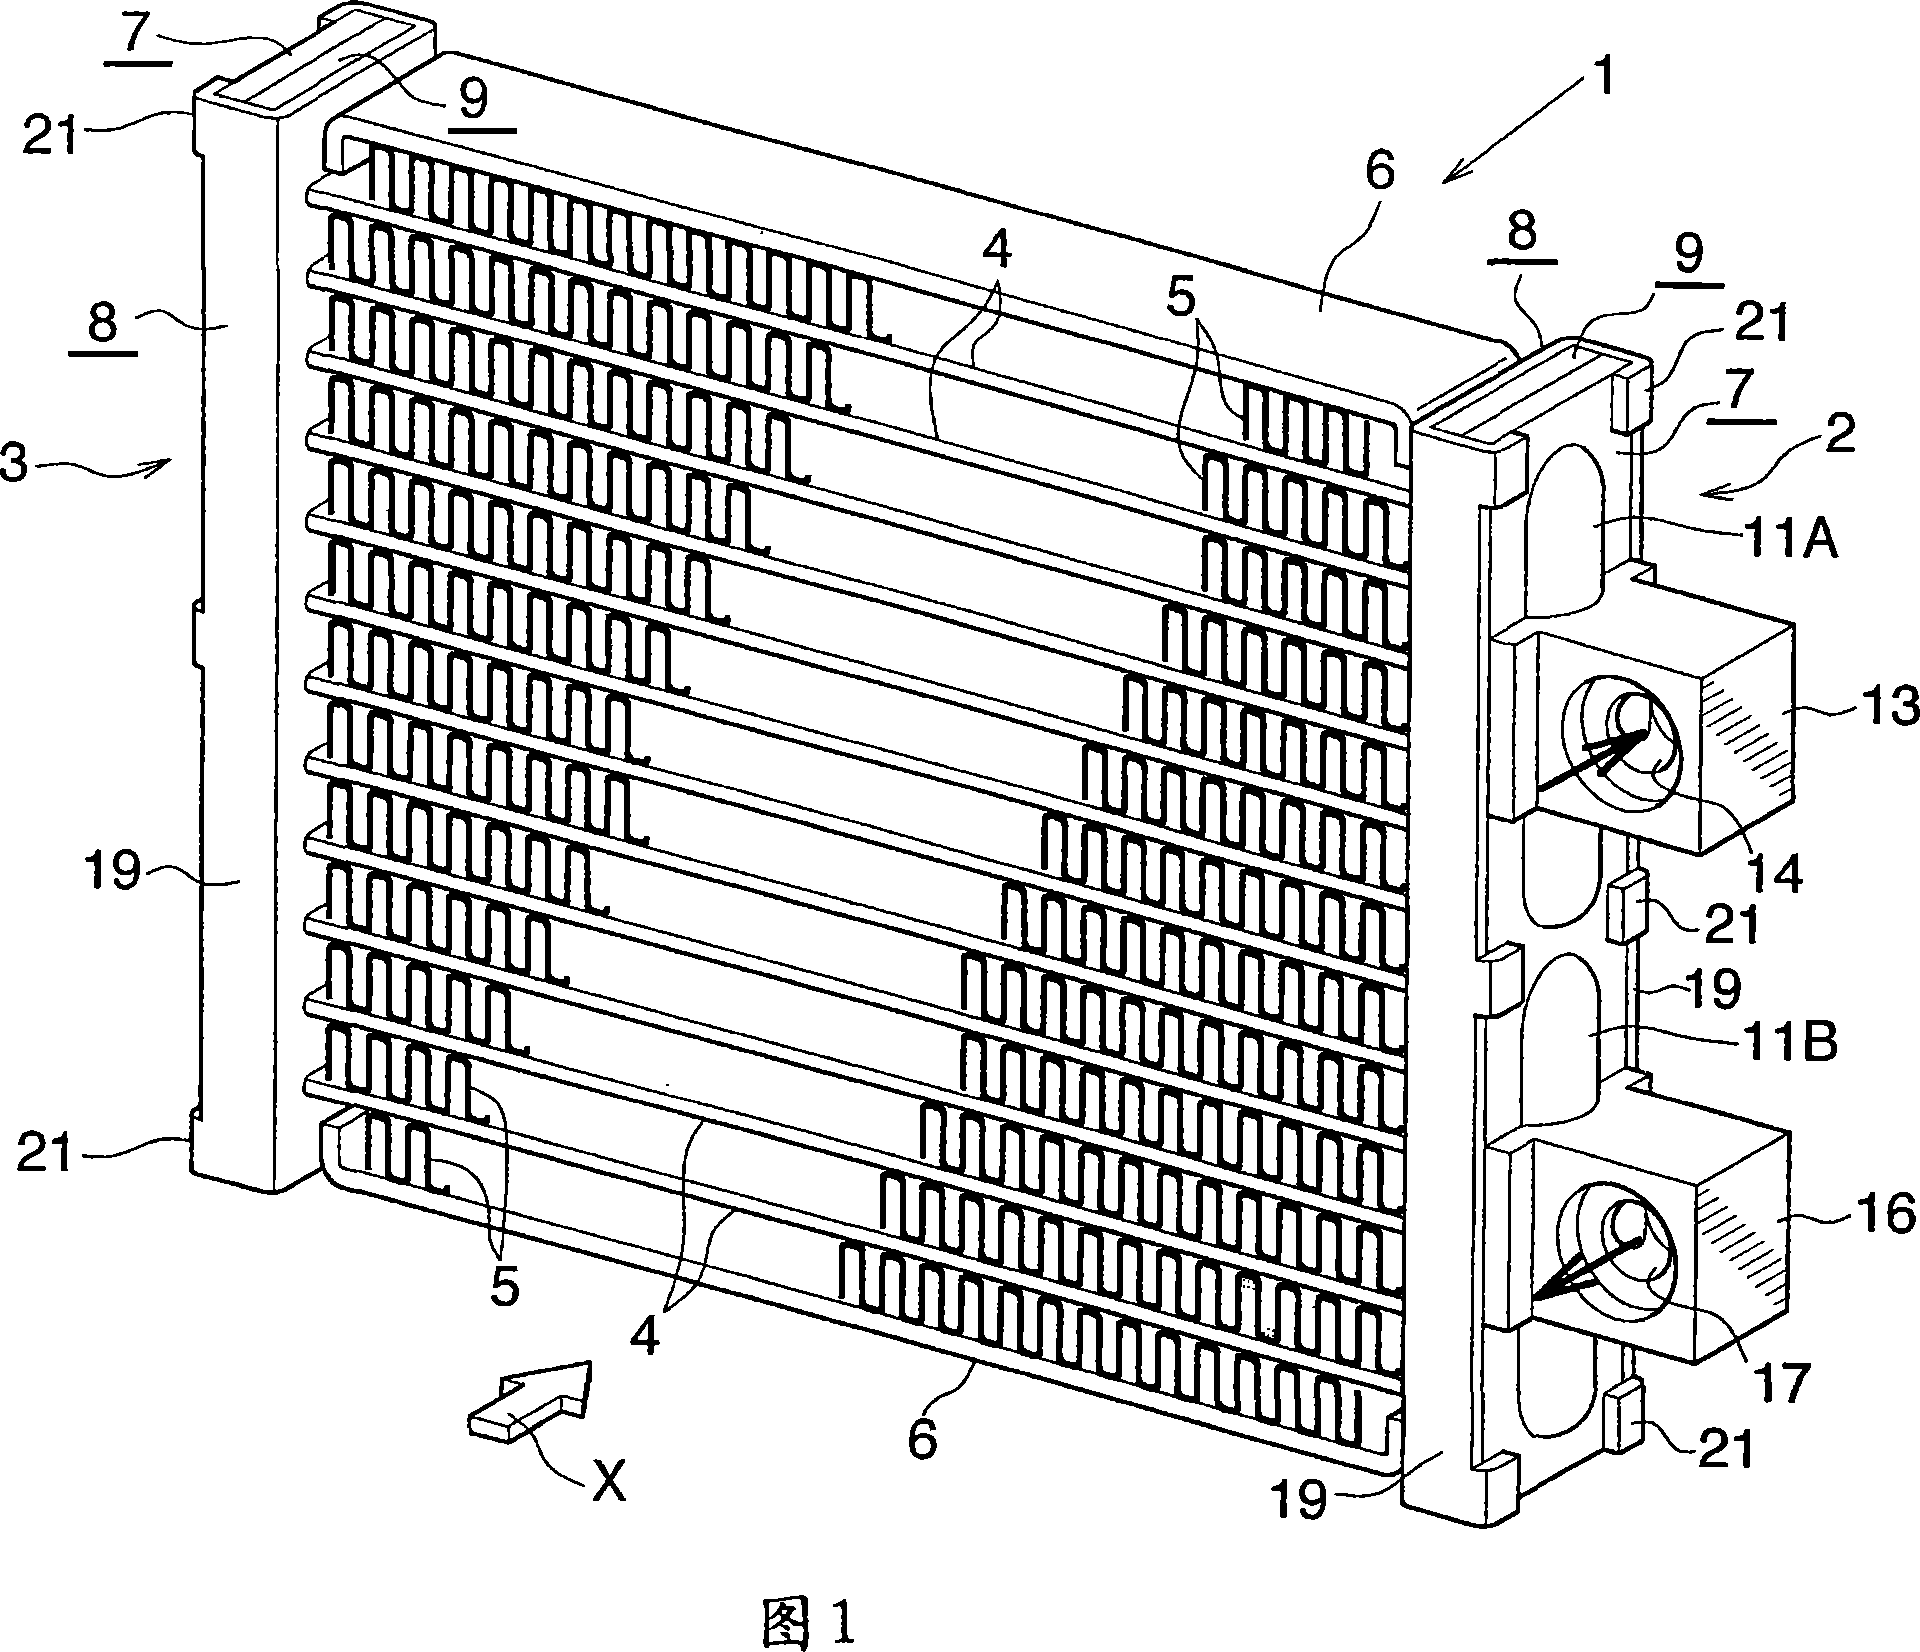 Heat exchanger header tank and heat exchanger comprising same